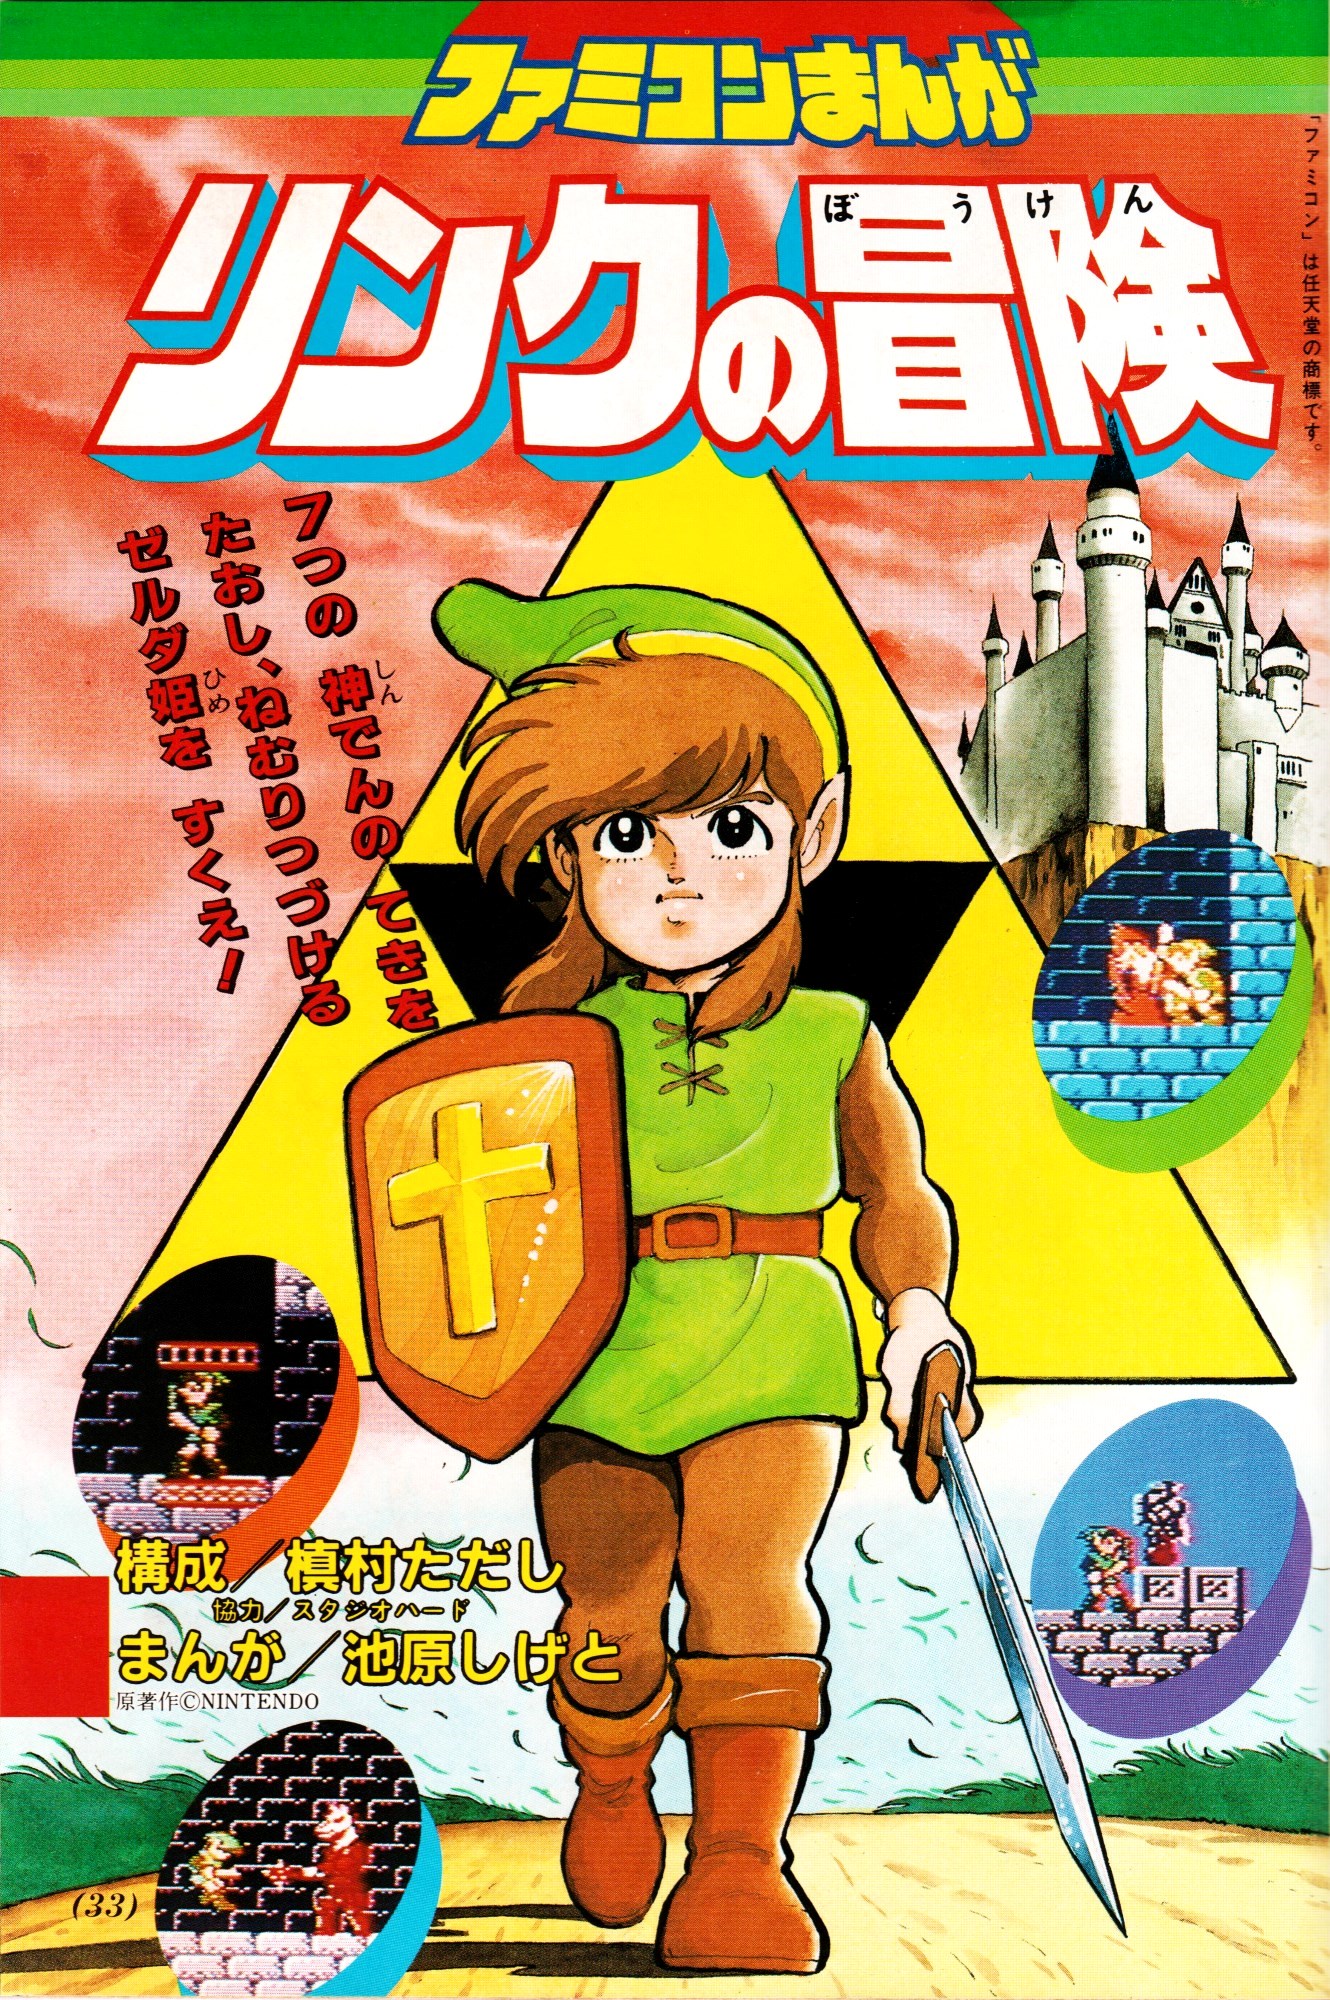 Zelda II: The Adventure of Link (IKEHARA Shigeto) cover 0